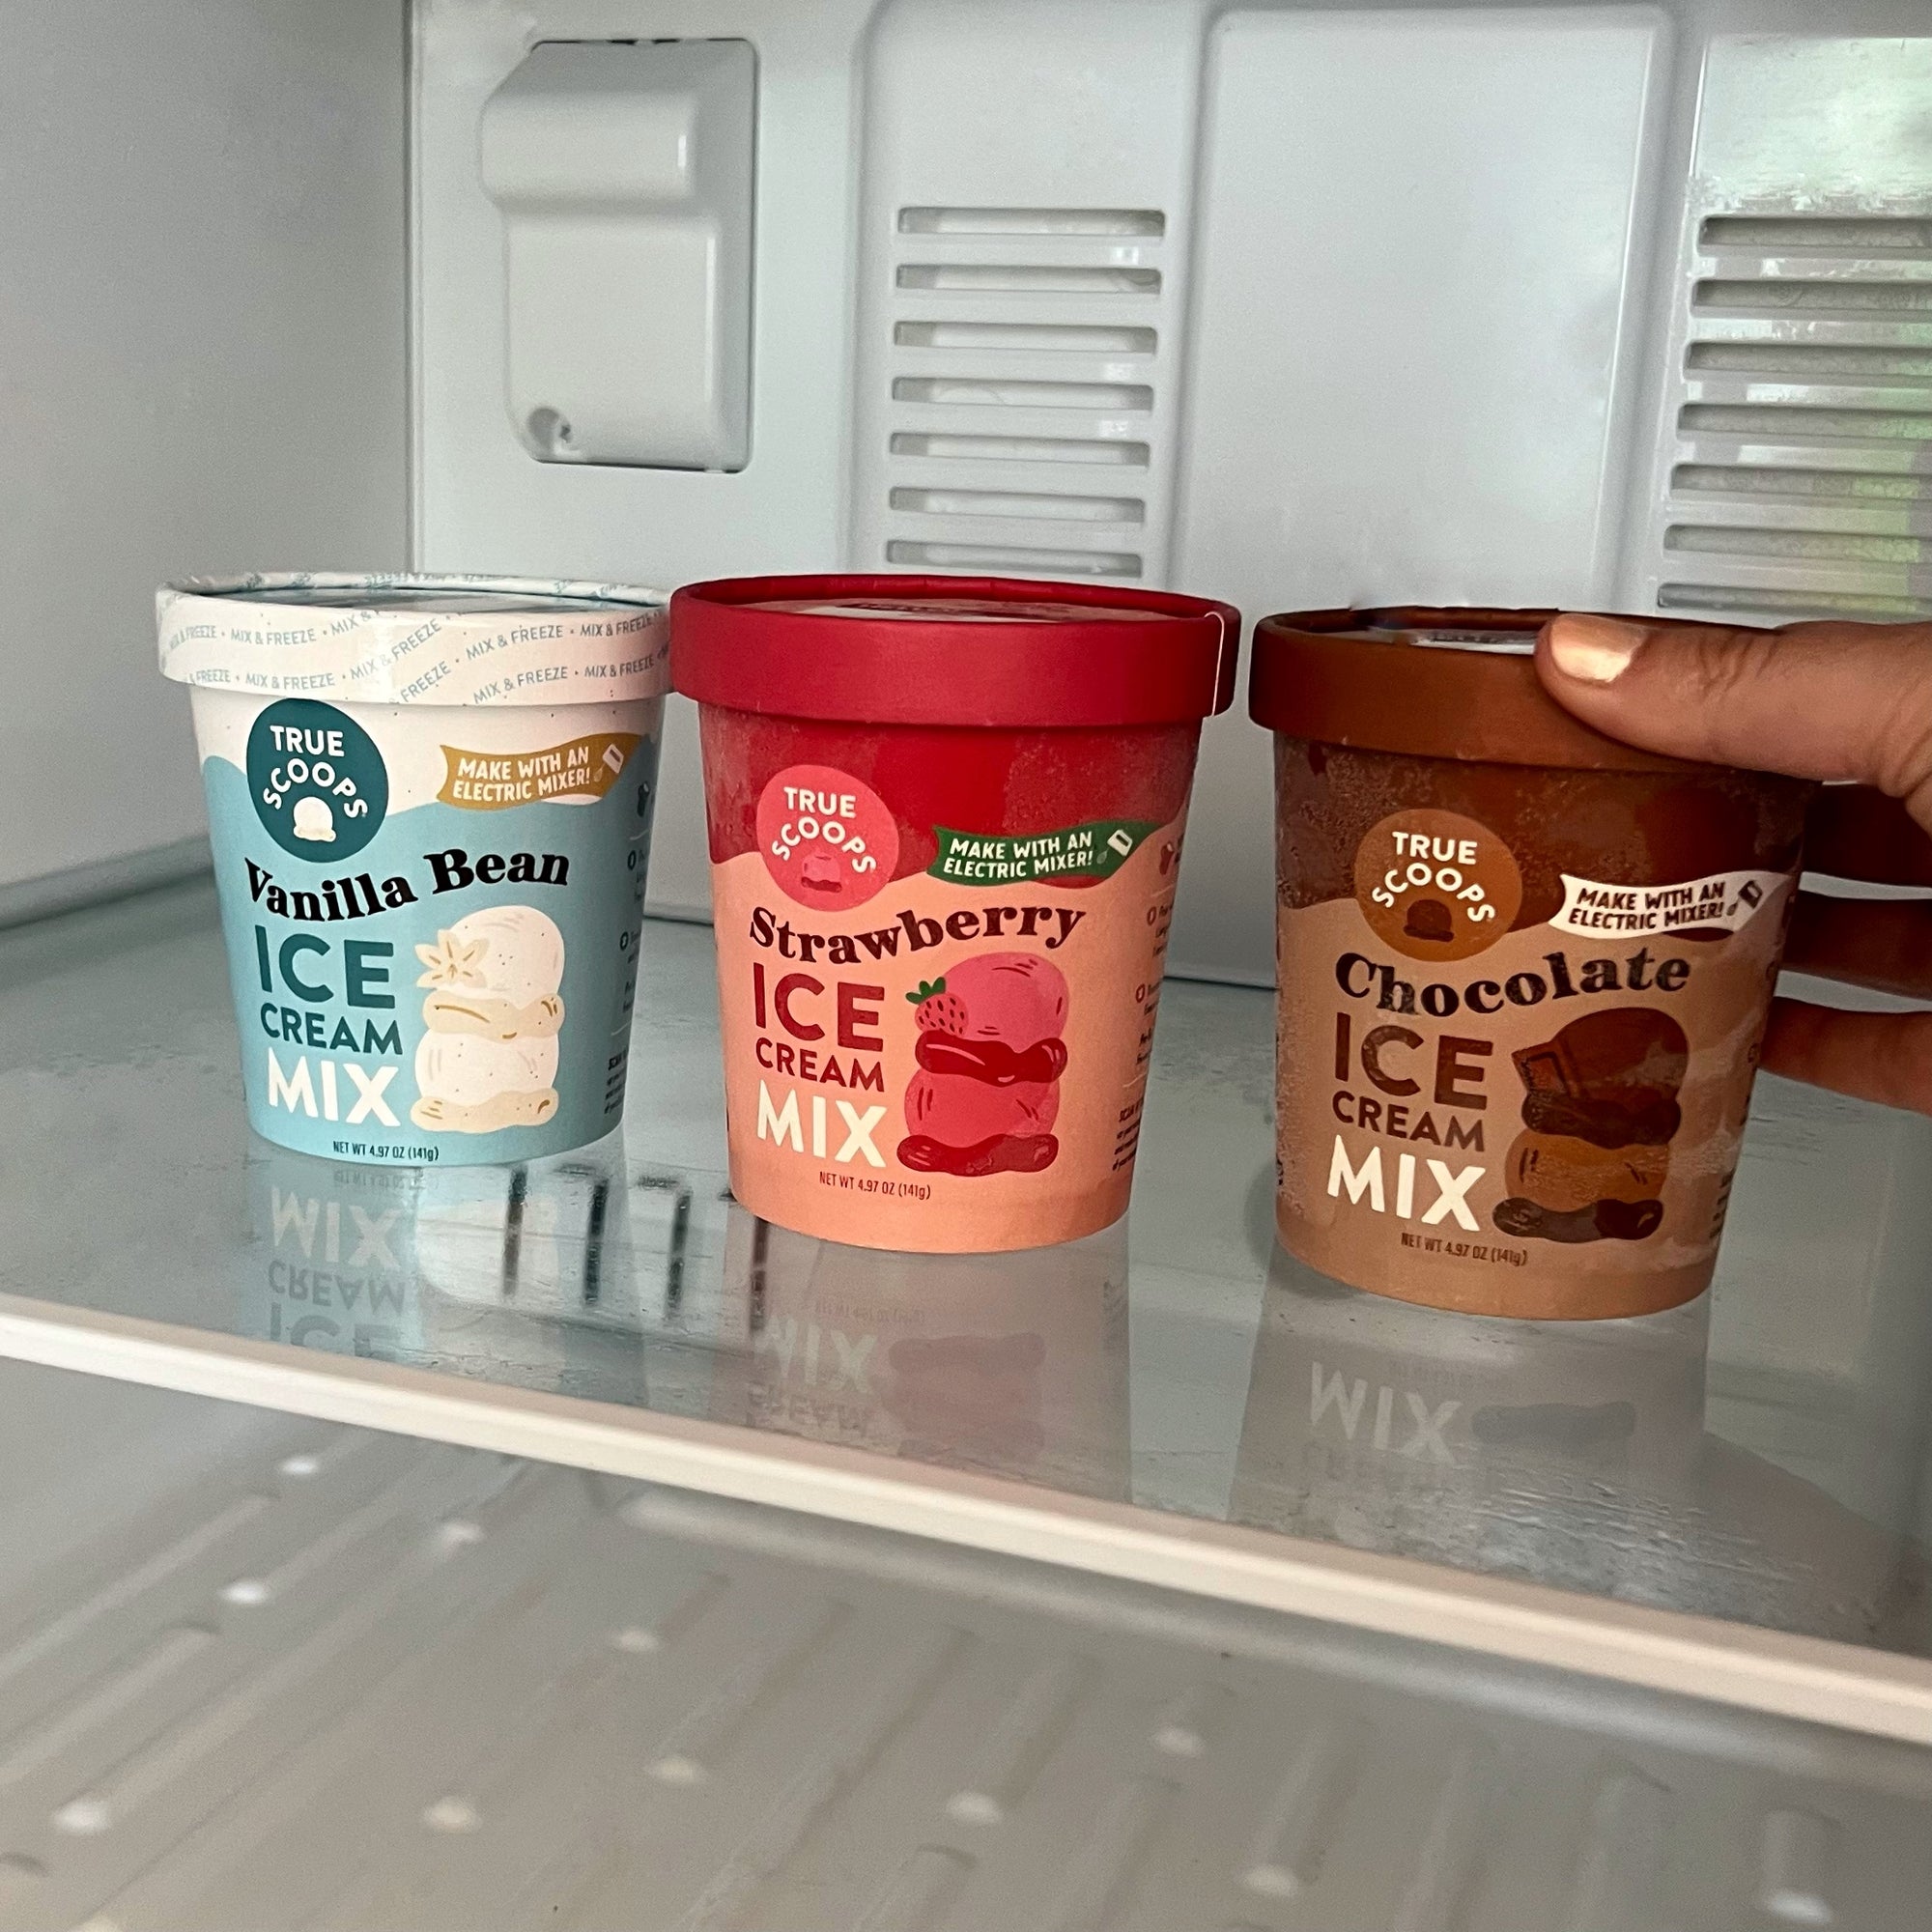 Is It Dangerous To Eat Freezer Burned Ice Cream?